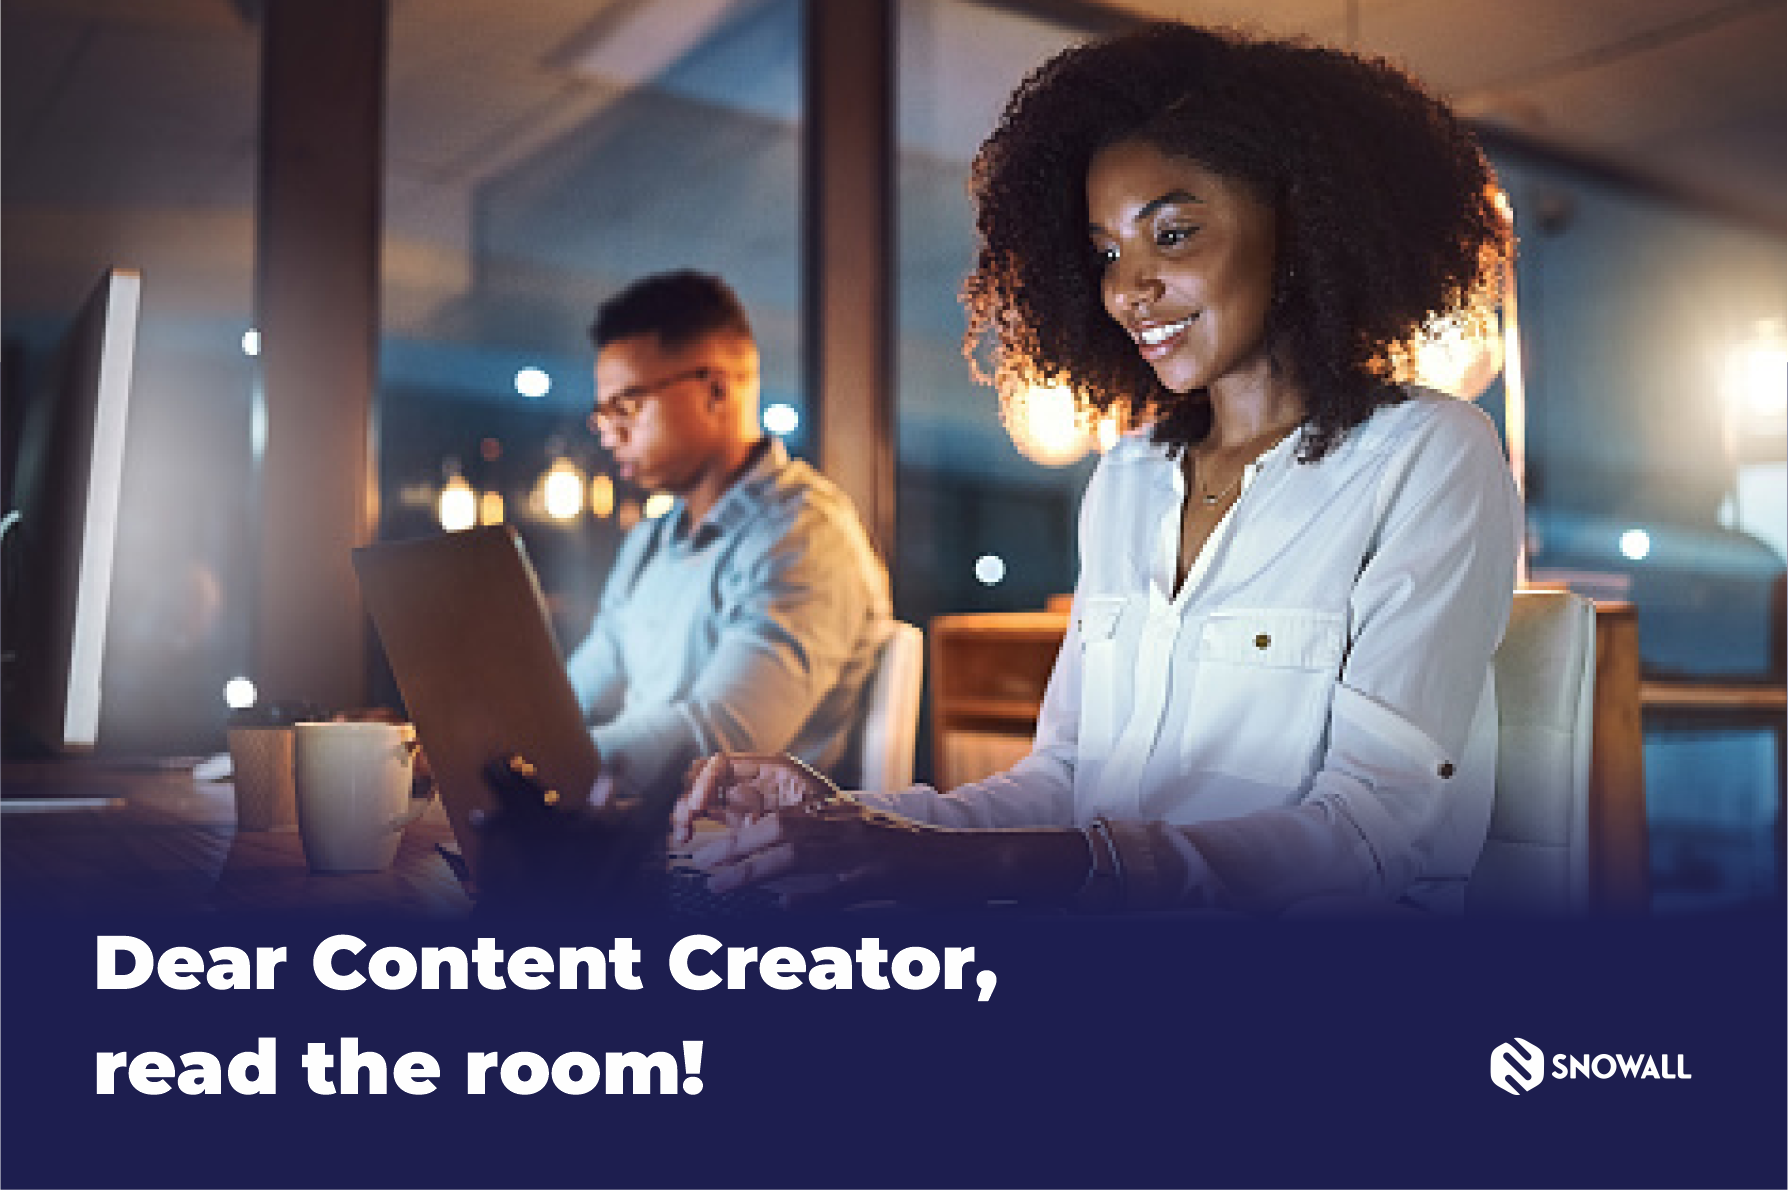 Dear Content Creator, read the room!